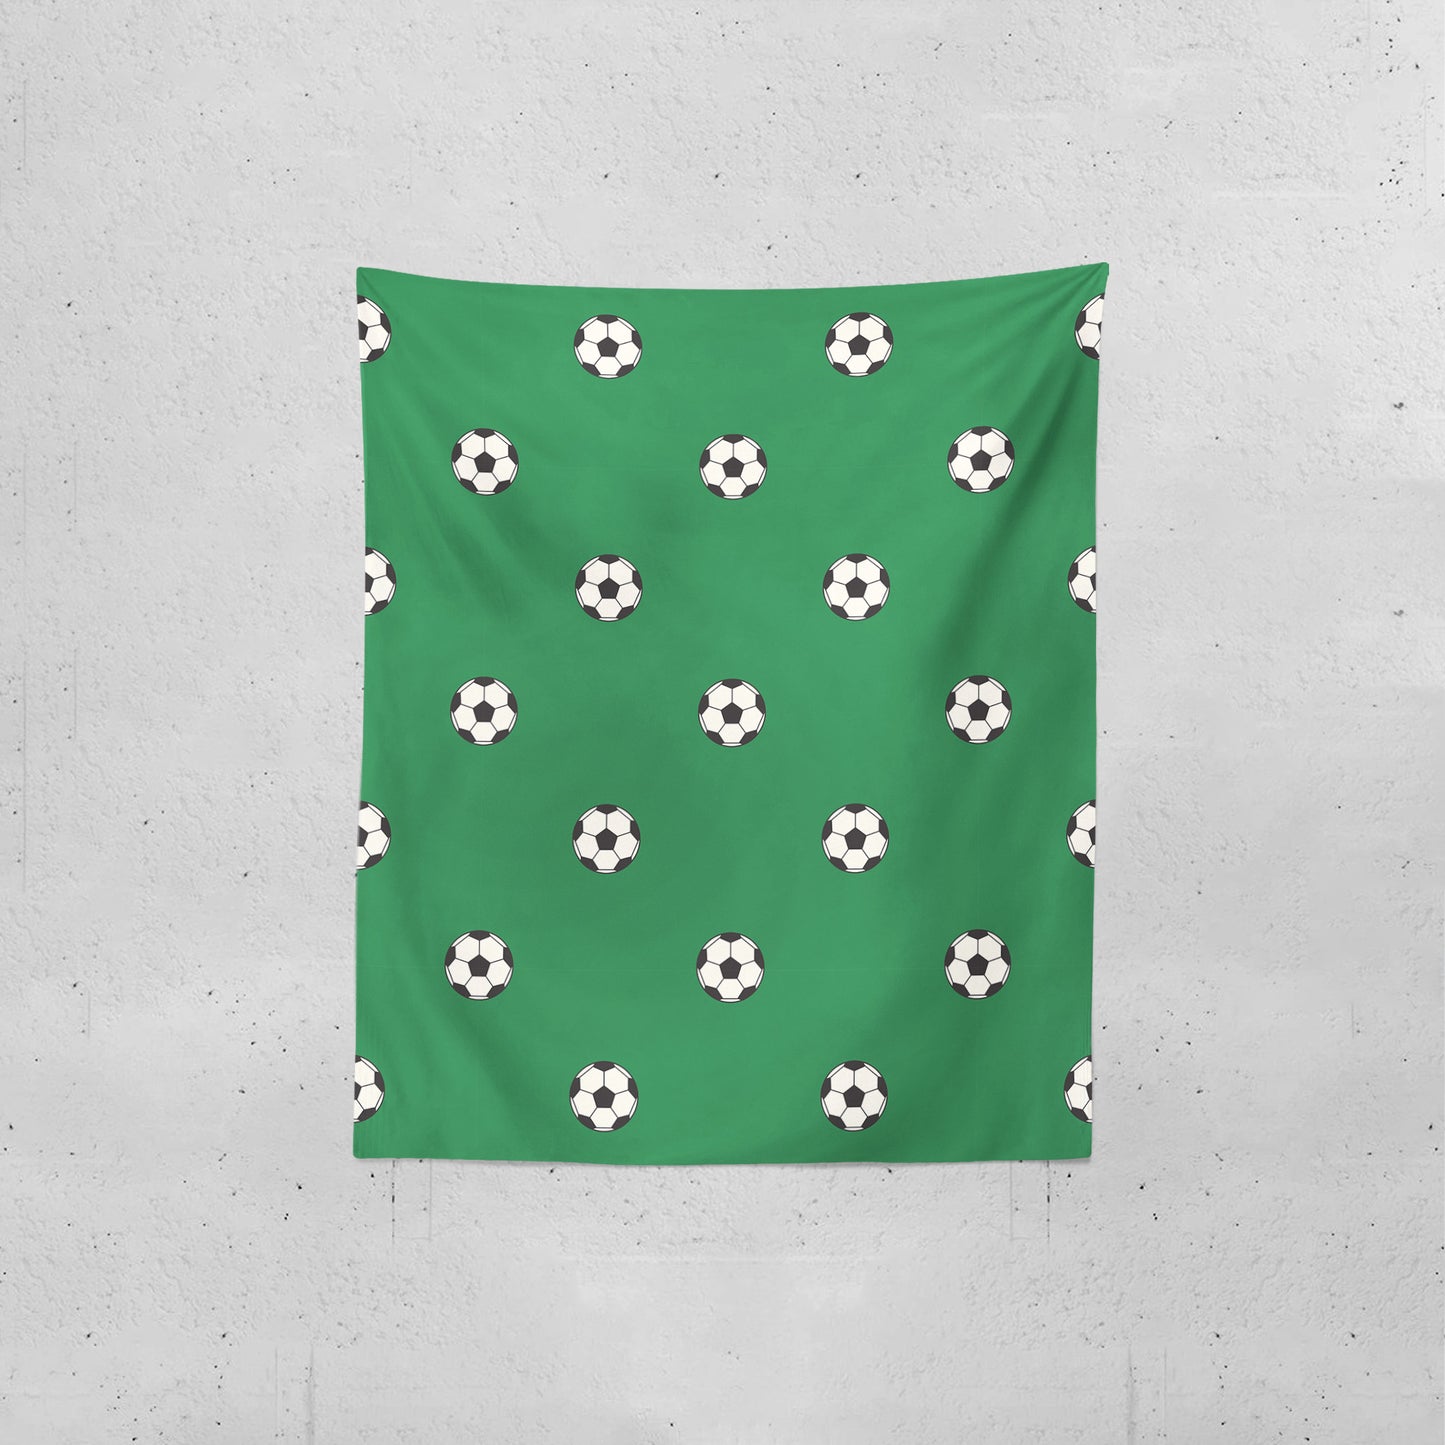 Football Ground With Balls Tapestries | #Footballfan